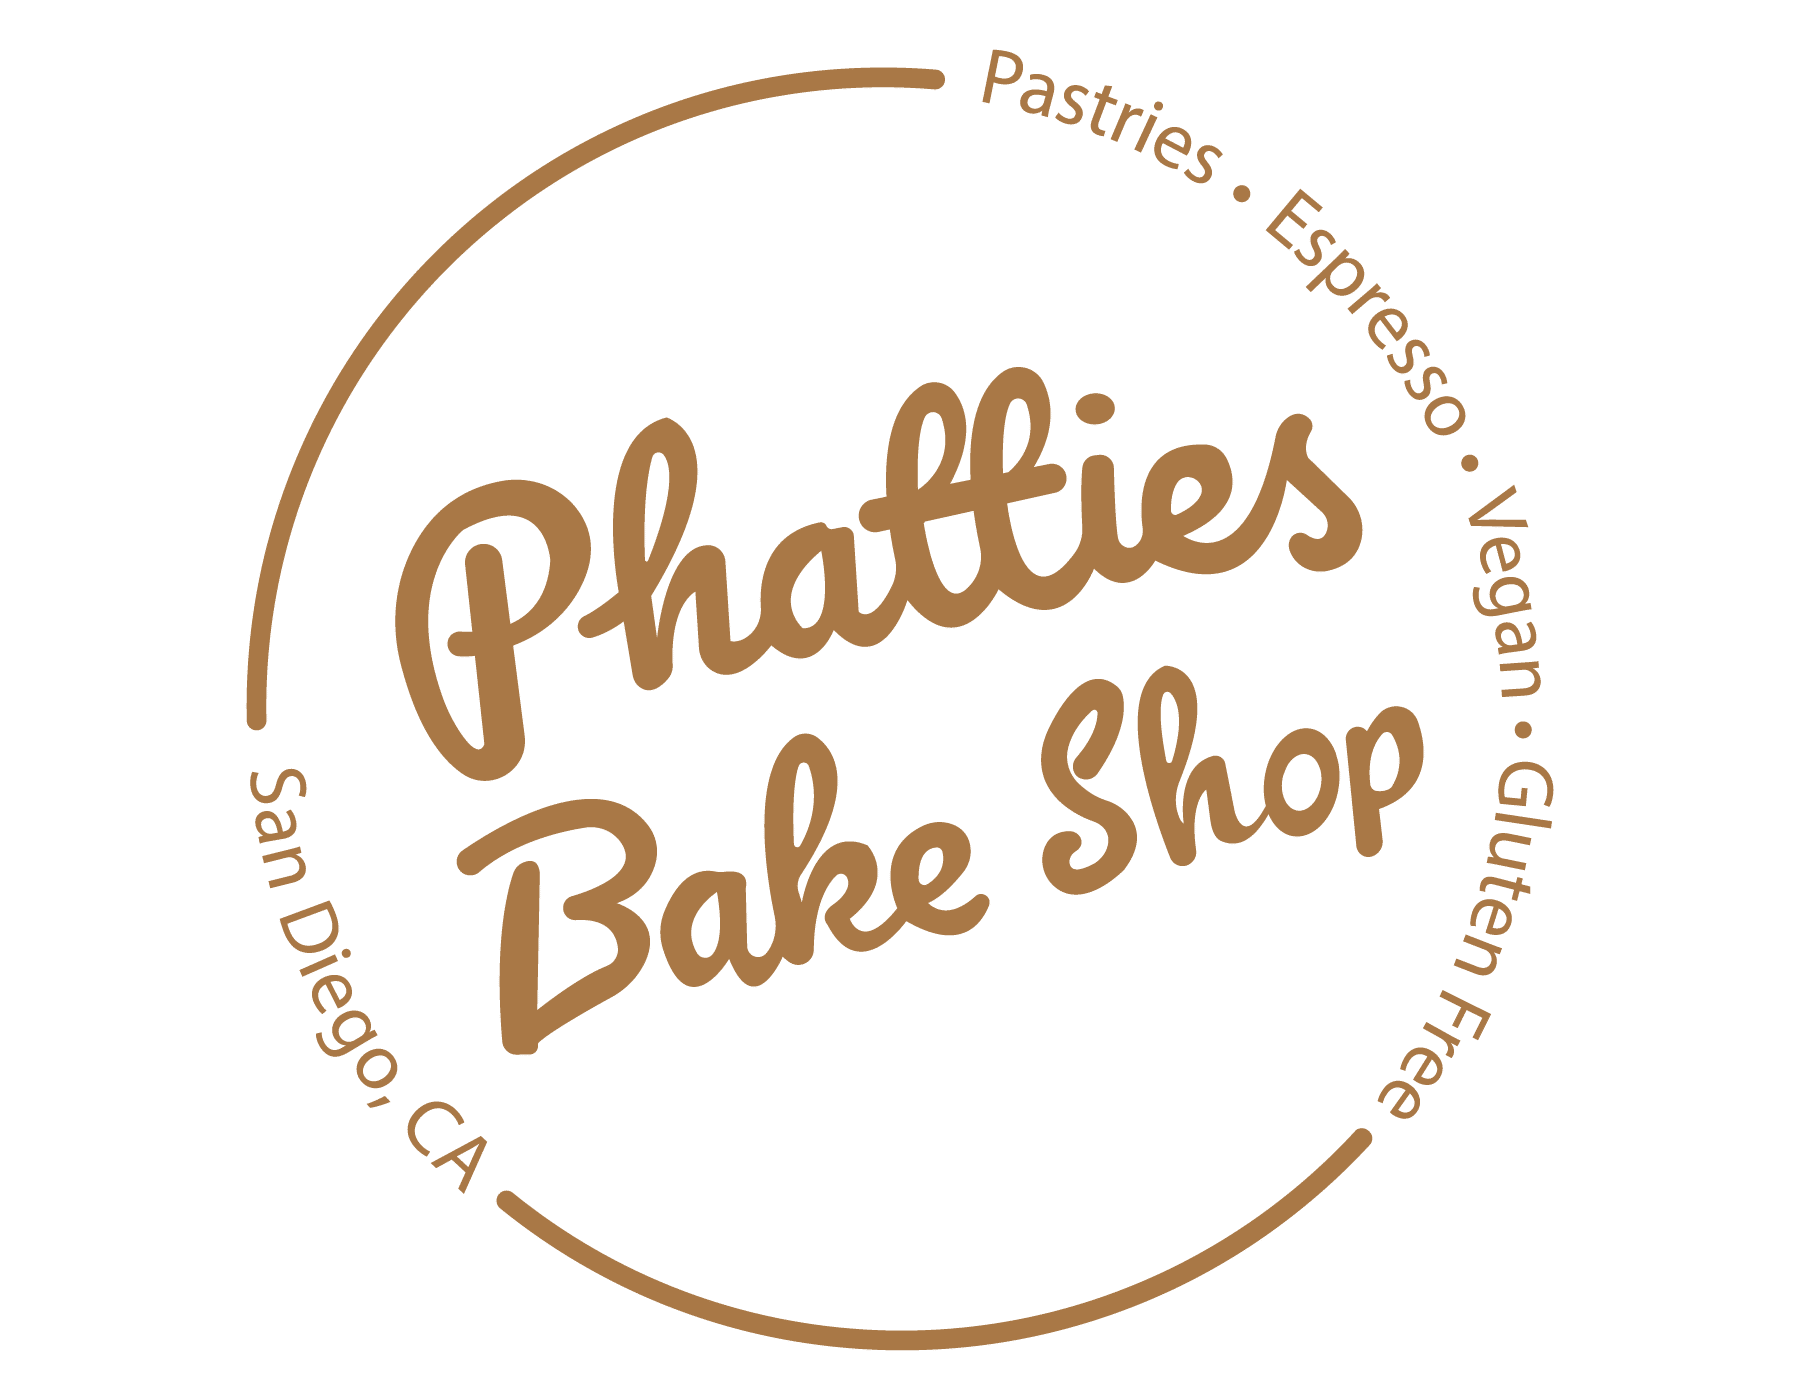 Phatties bake shop logo.